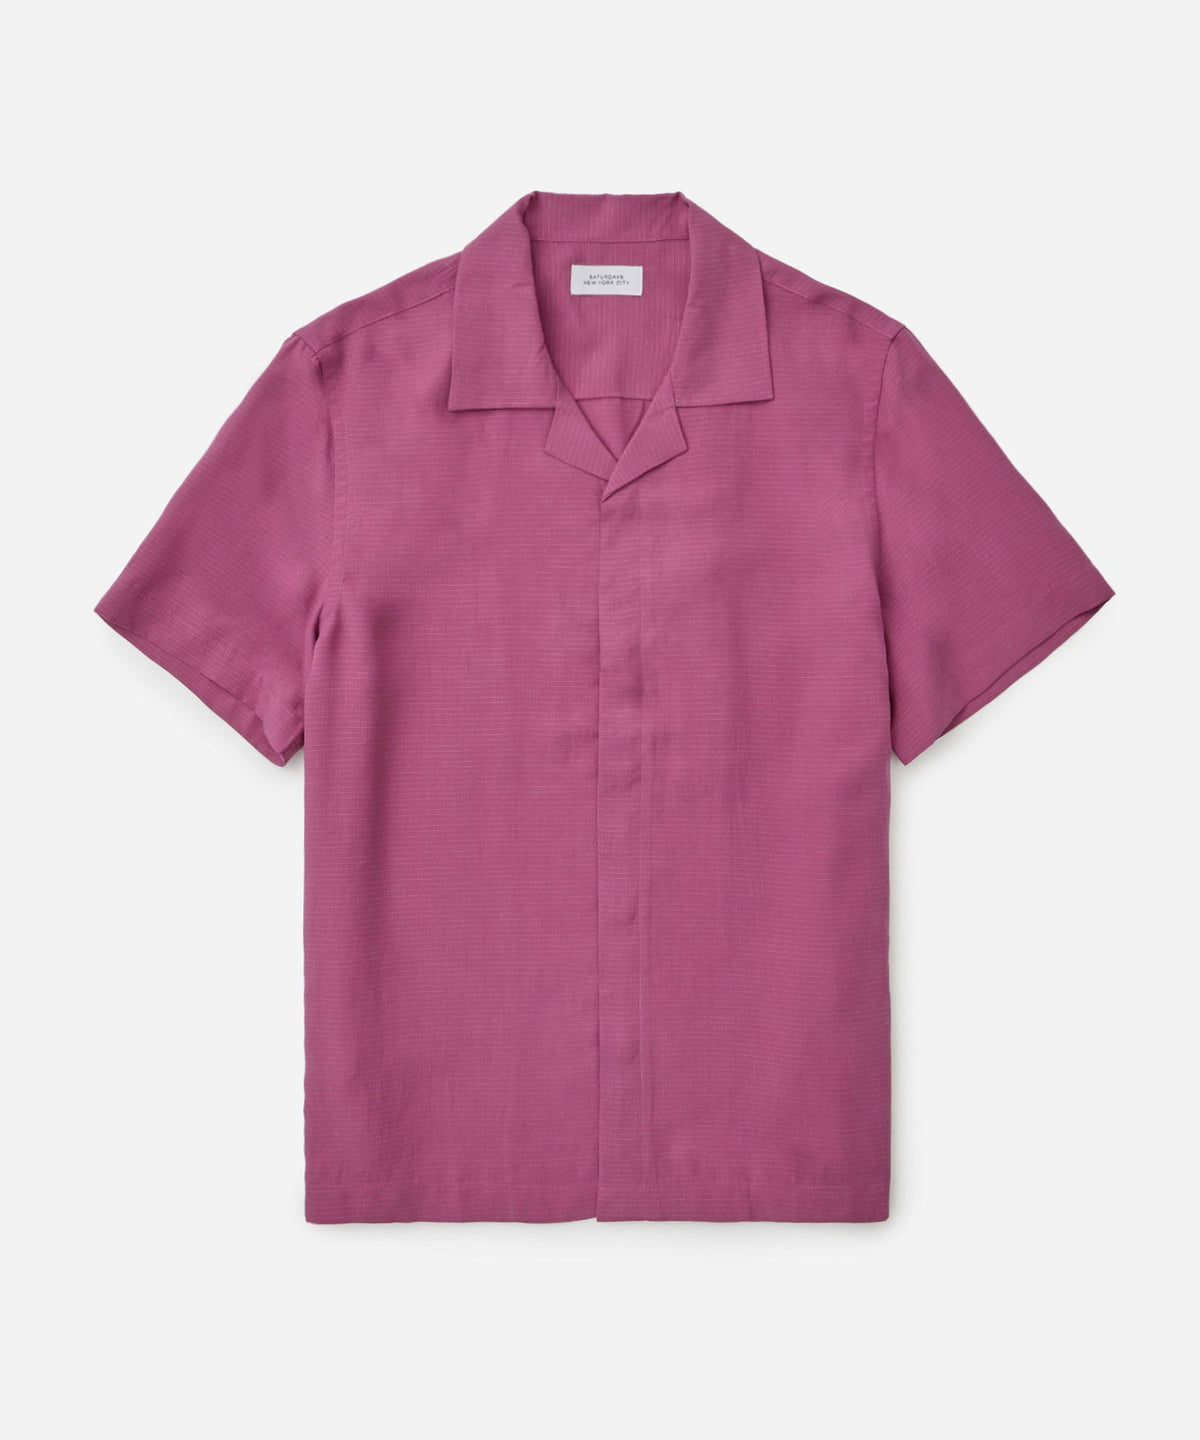 York Ripstop Short Sleeve Shirt in Violet Quartz